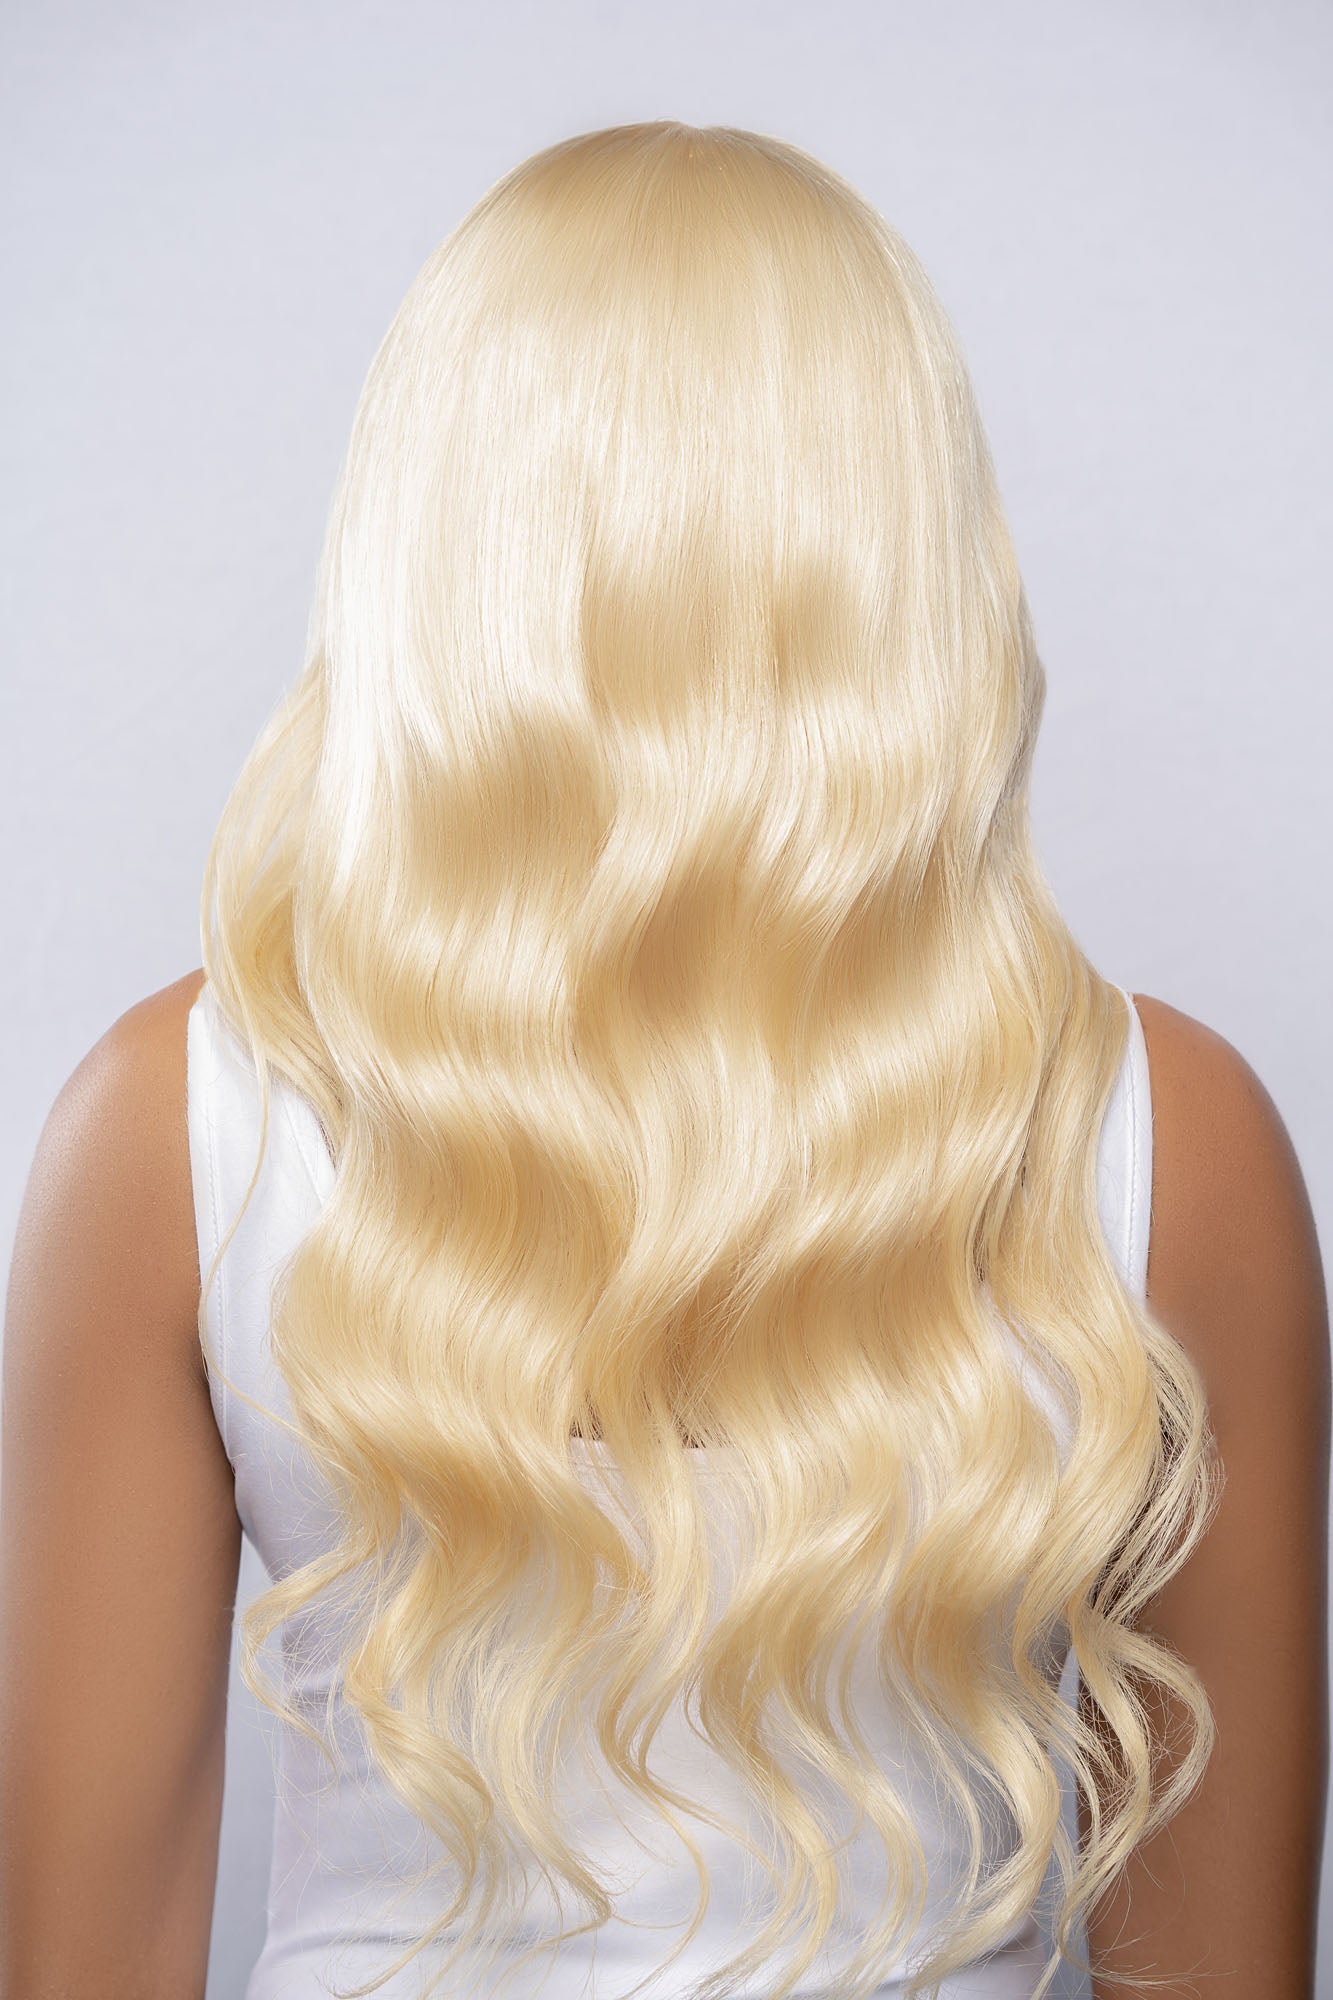 Raw Cambodian 613 Blonde Wavy Hair Extension